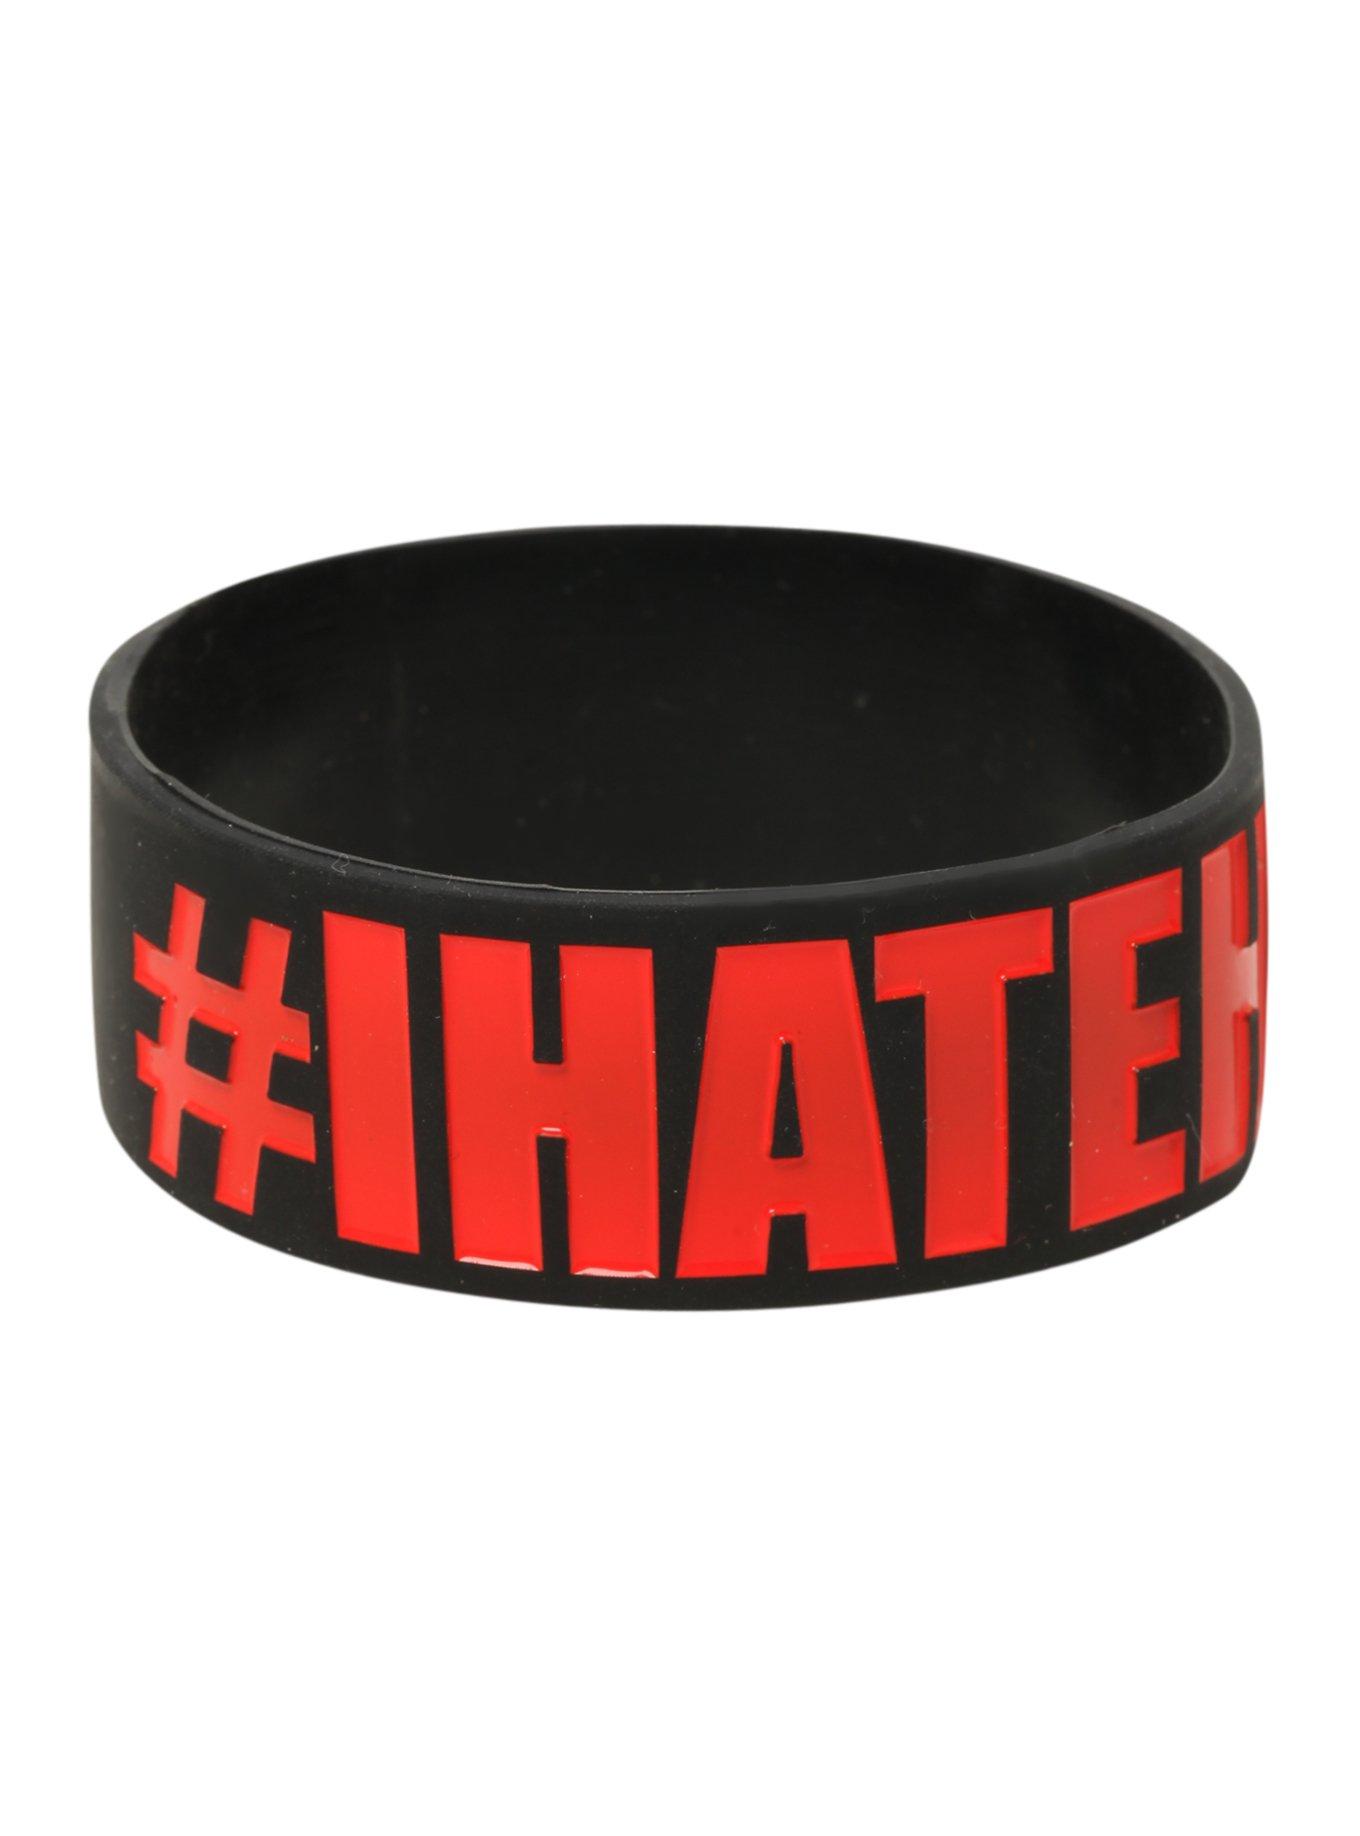 I Hate Hashtags Rubber Bracelet, , hi-res